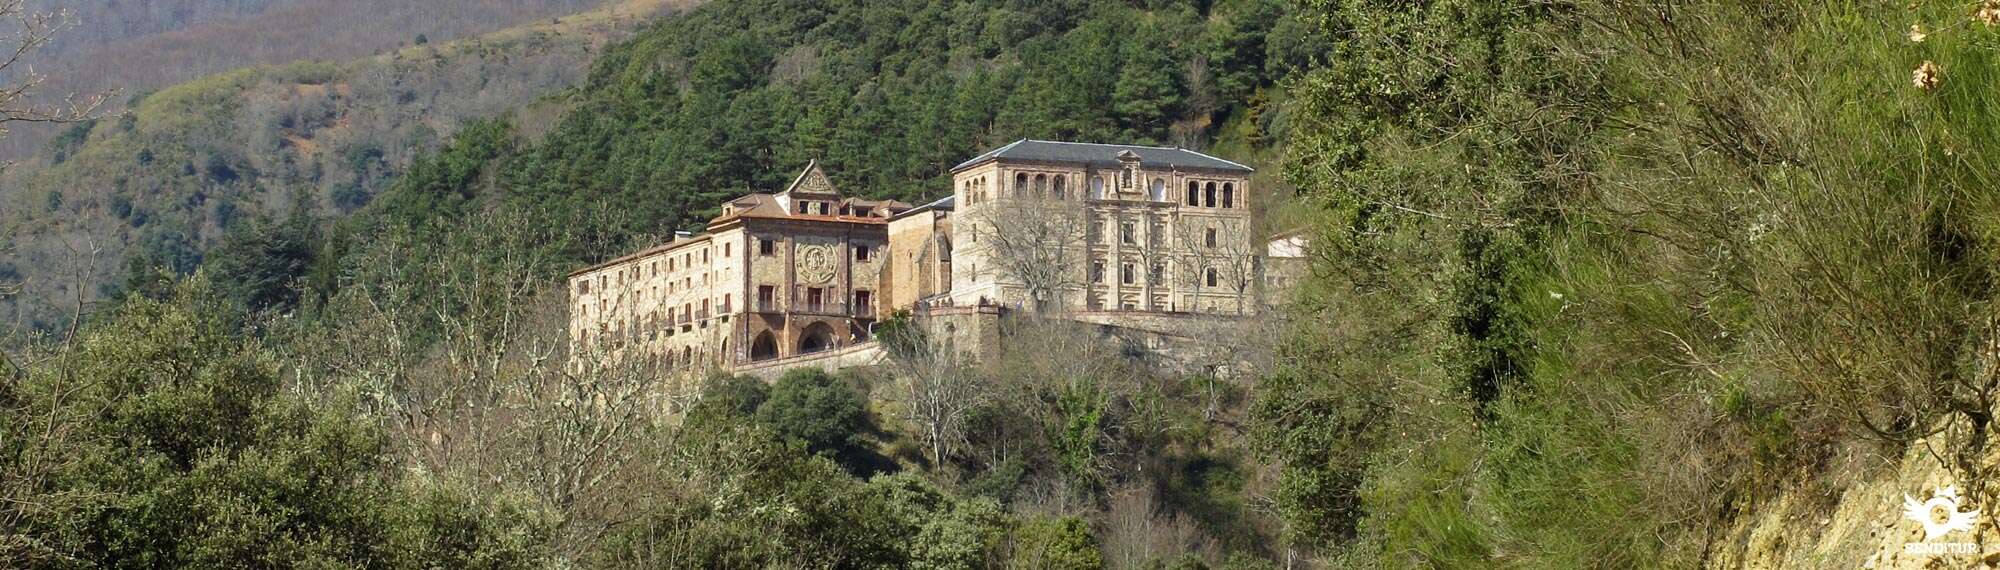 Monastery of Valvanera